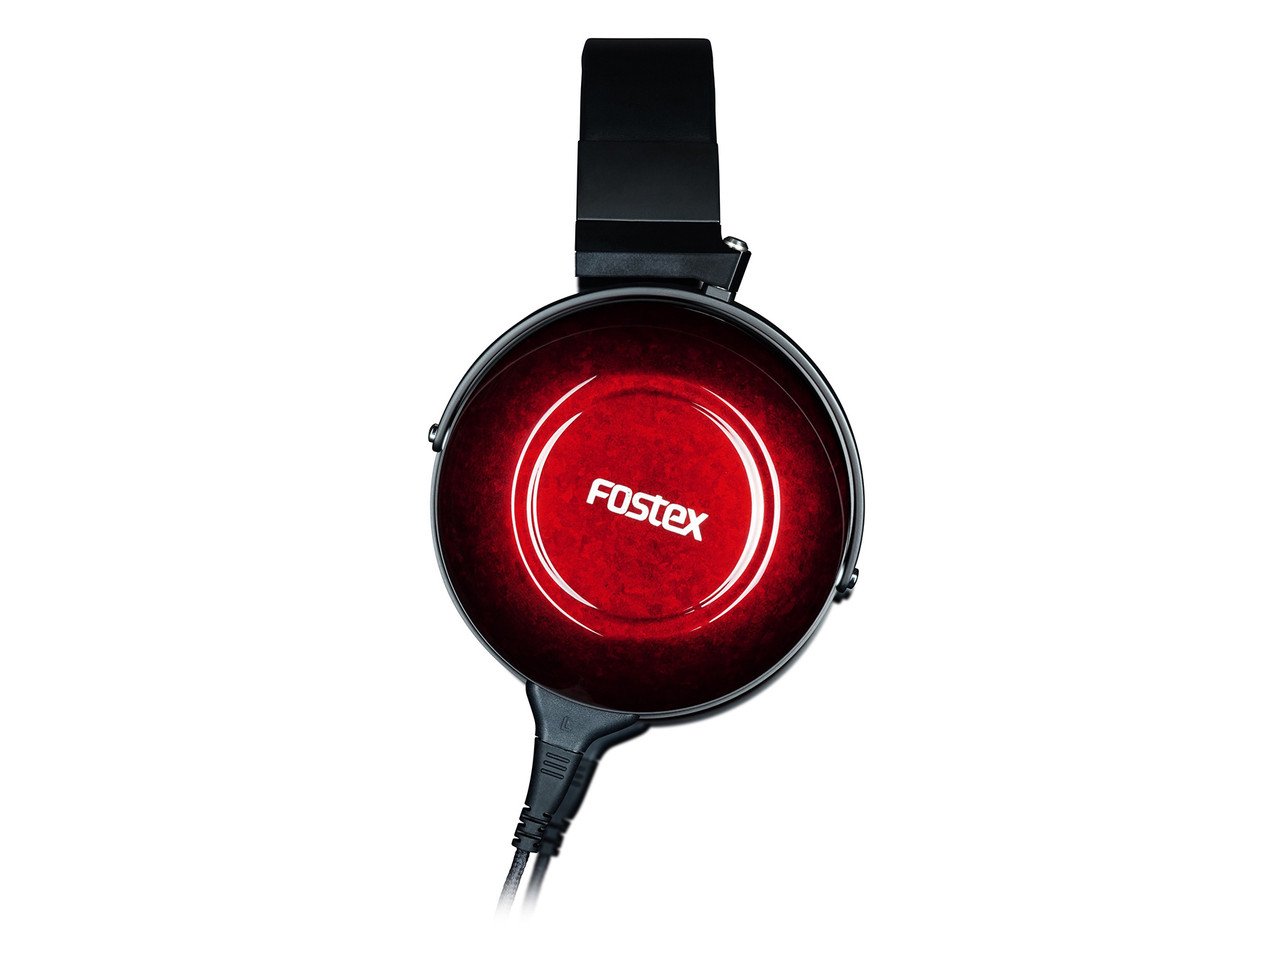 Fostex TH900 mk2 Premium Reference Headphones